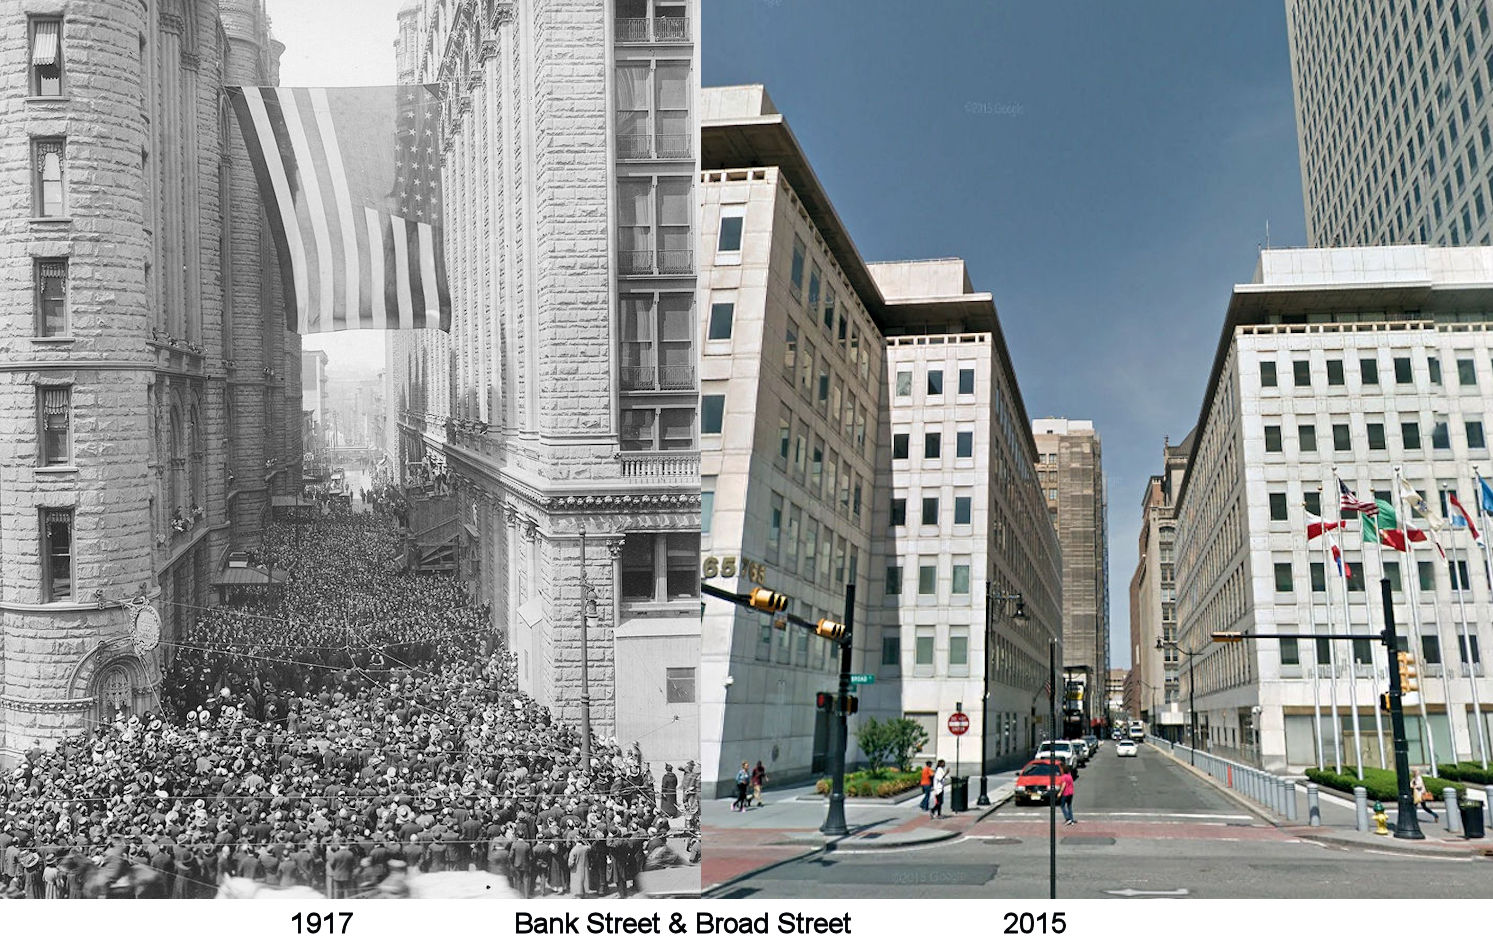 Bank Street & Broad Street
1917 - 2015
